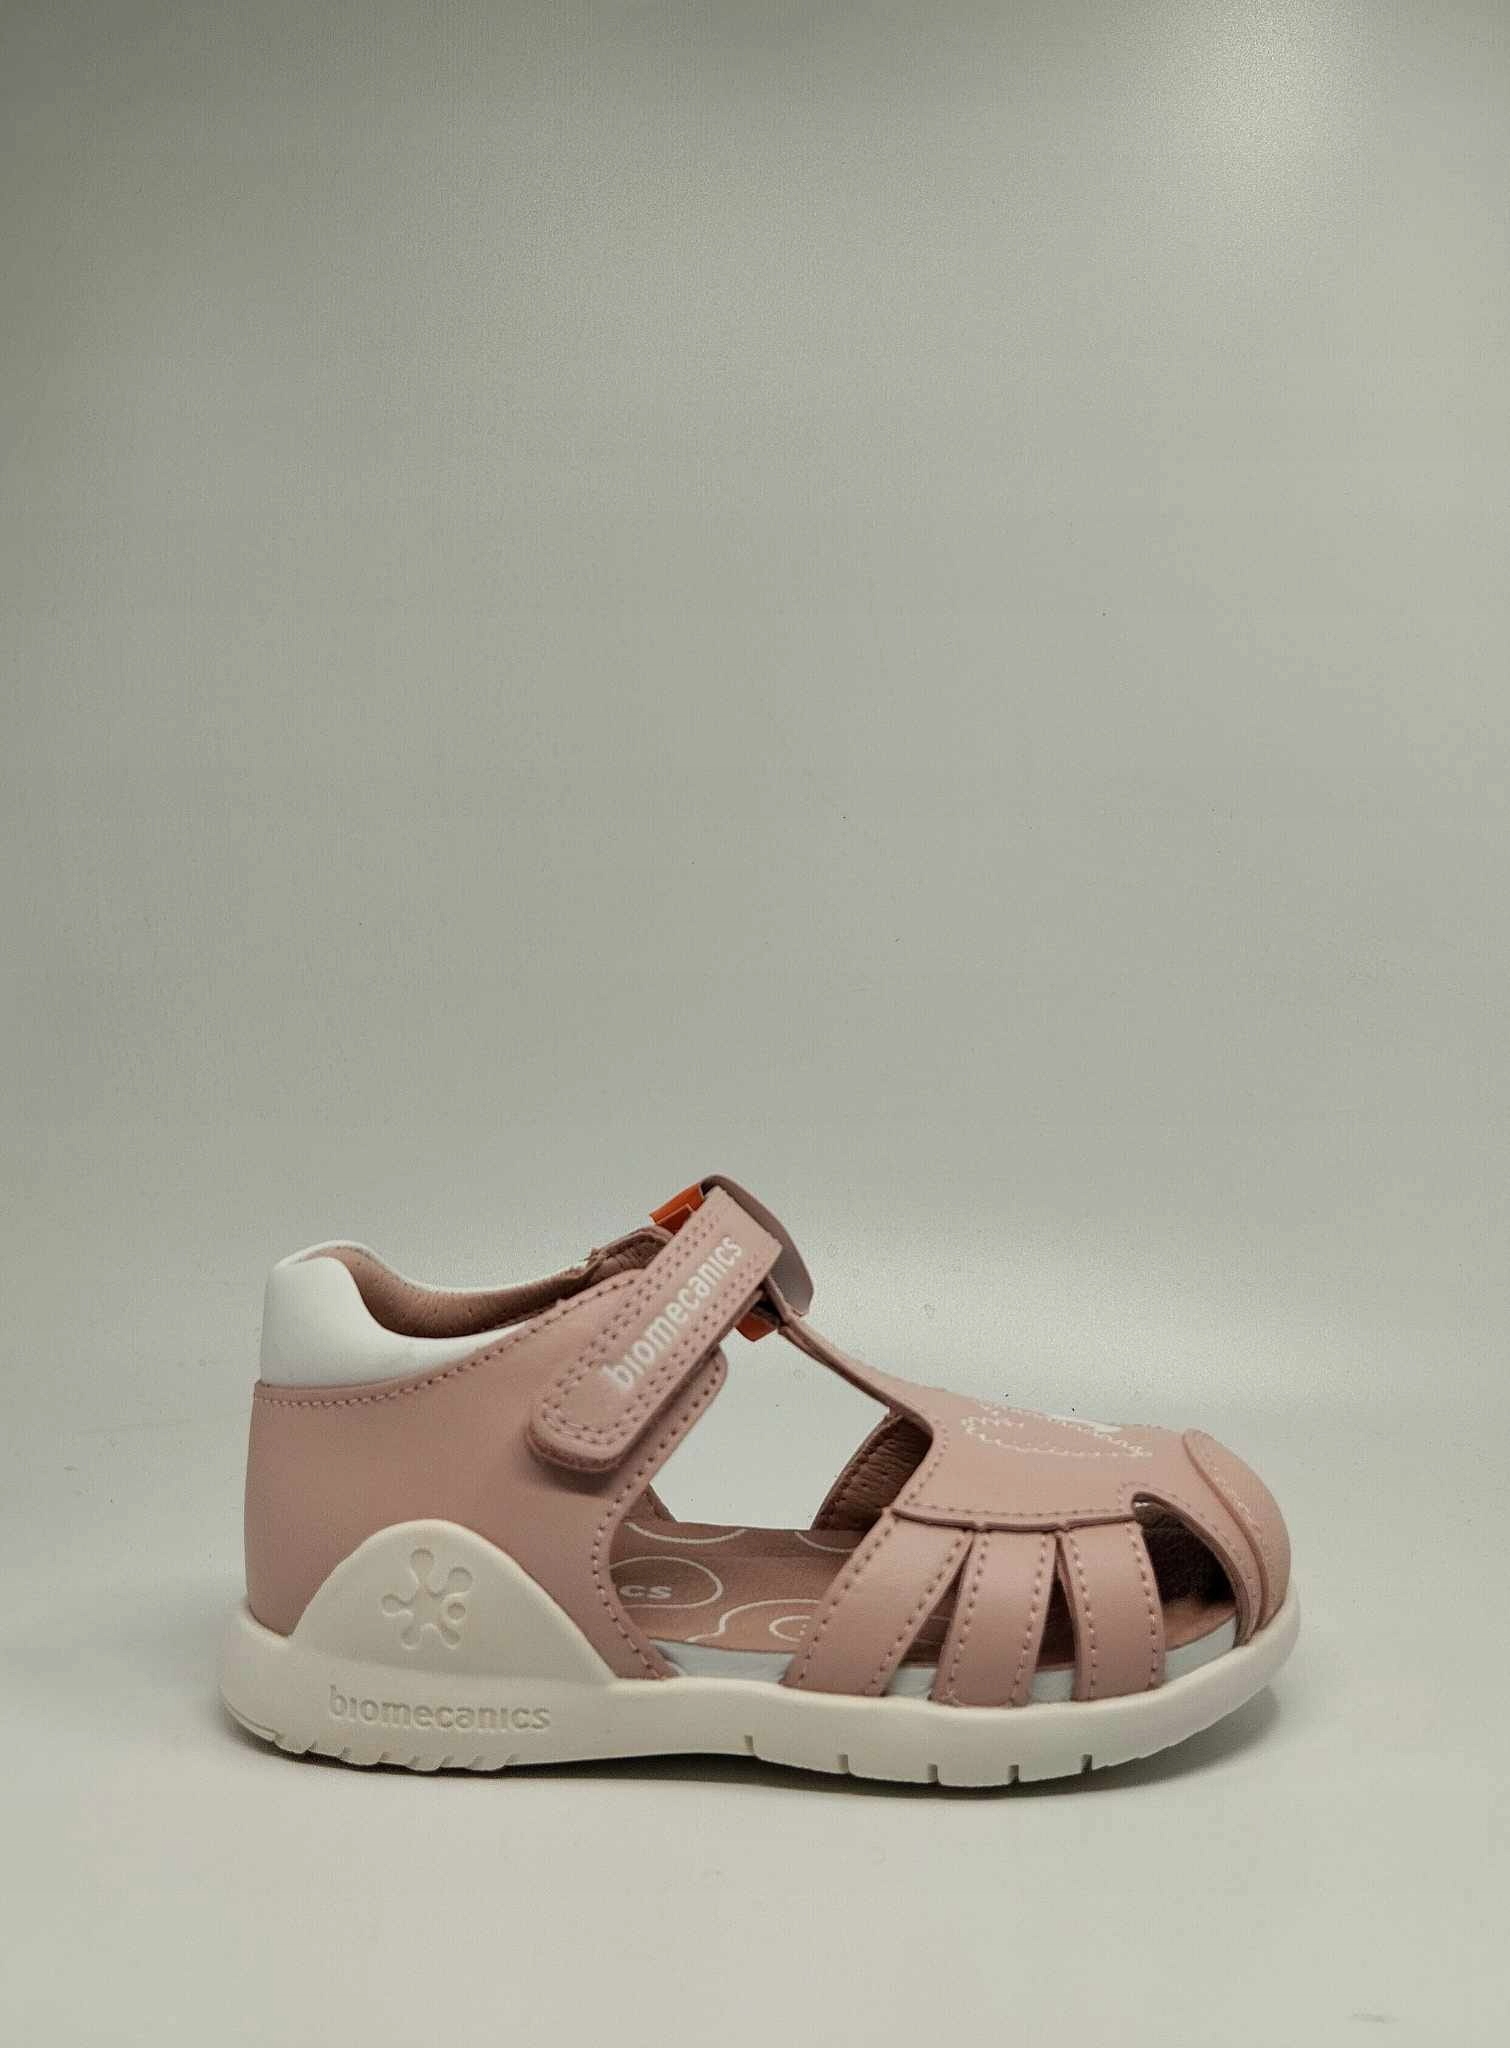 Dievčenské sandále BIOMECANICS 242230-A ružové - 24